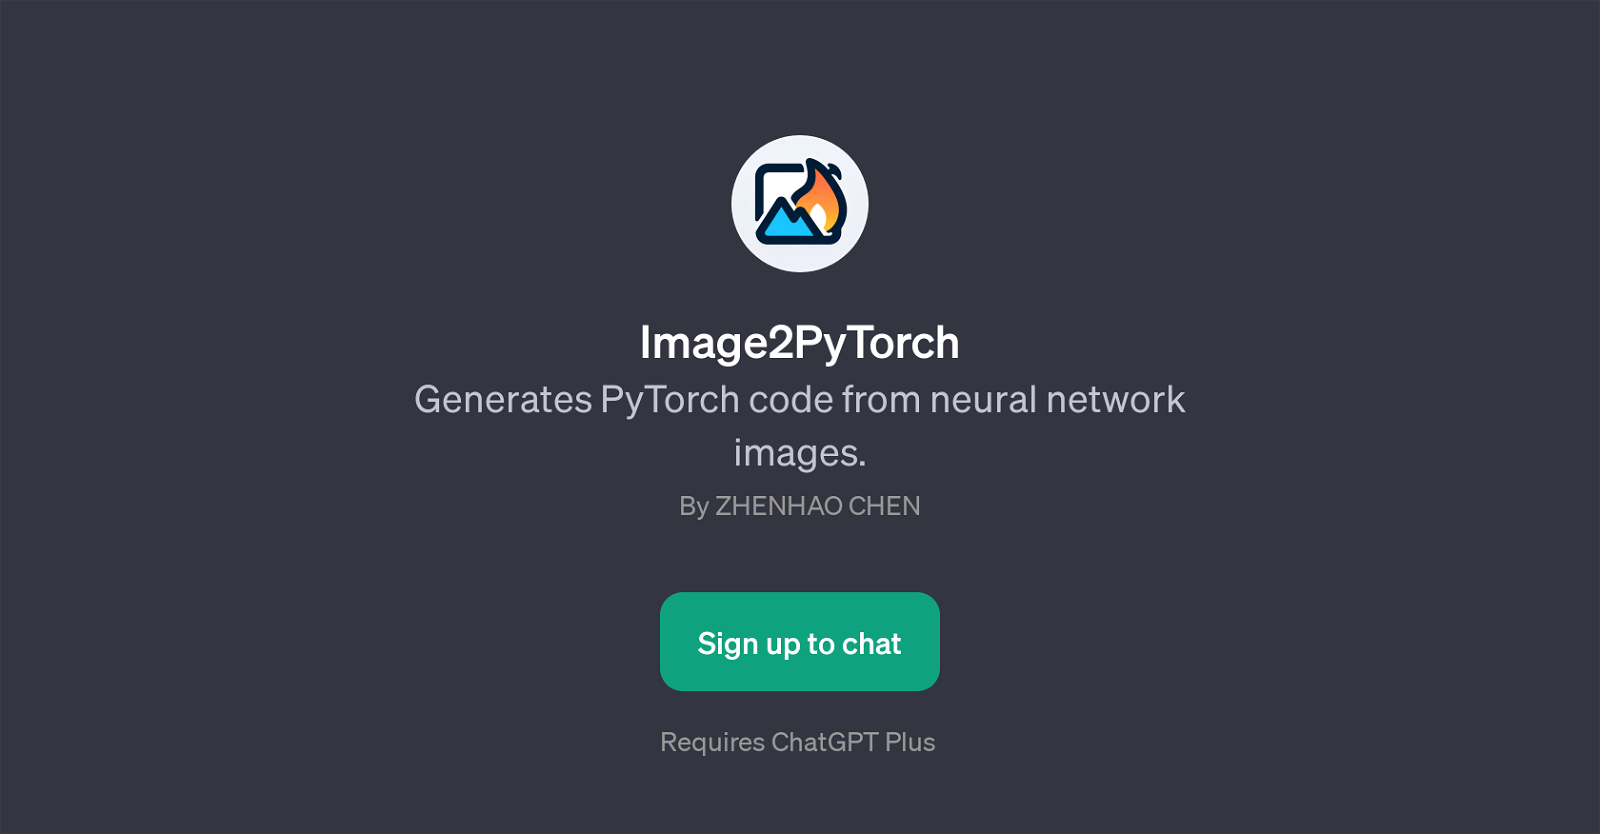 Image2PyTorch website